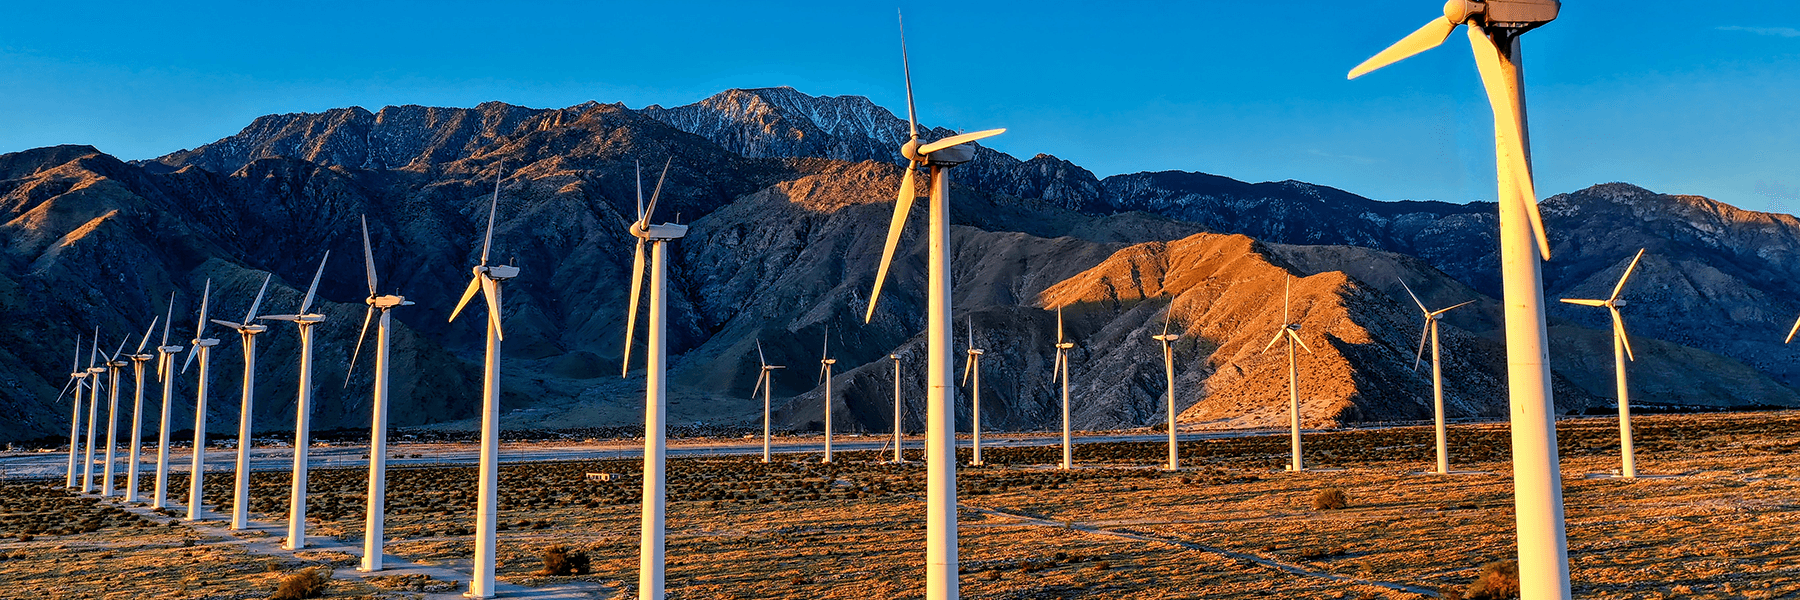 Wind turbines near a mountain range. Photo by Cameron Venti on Unsplash.com